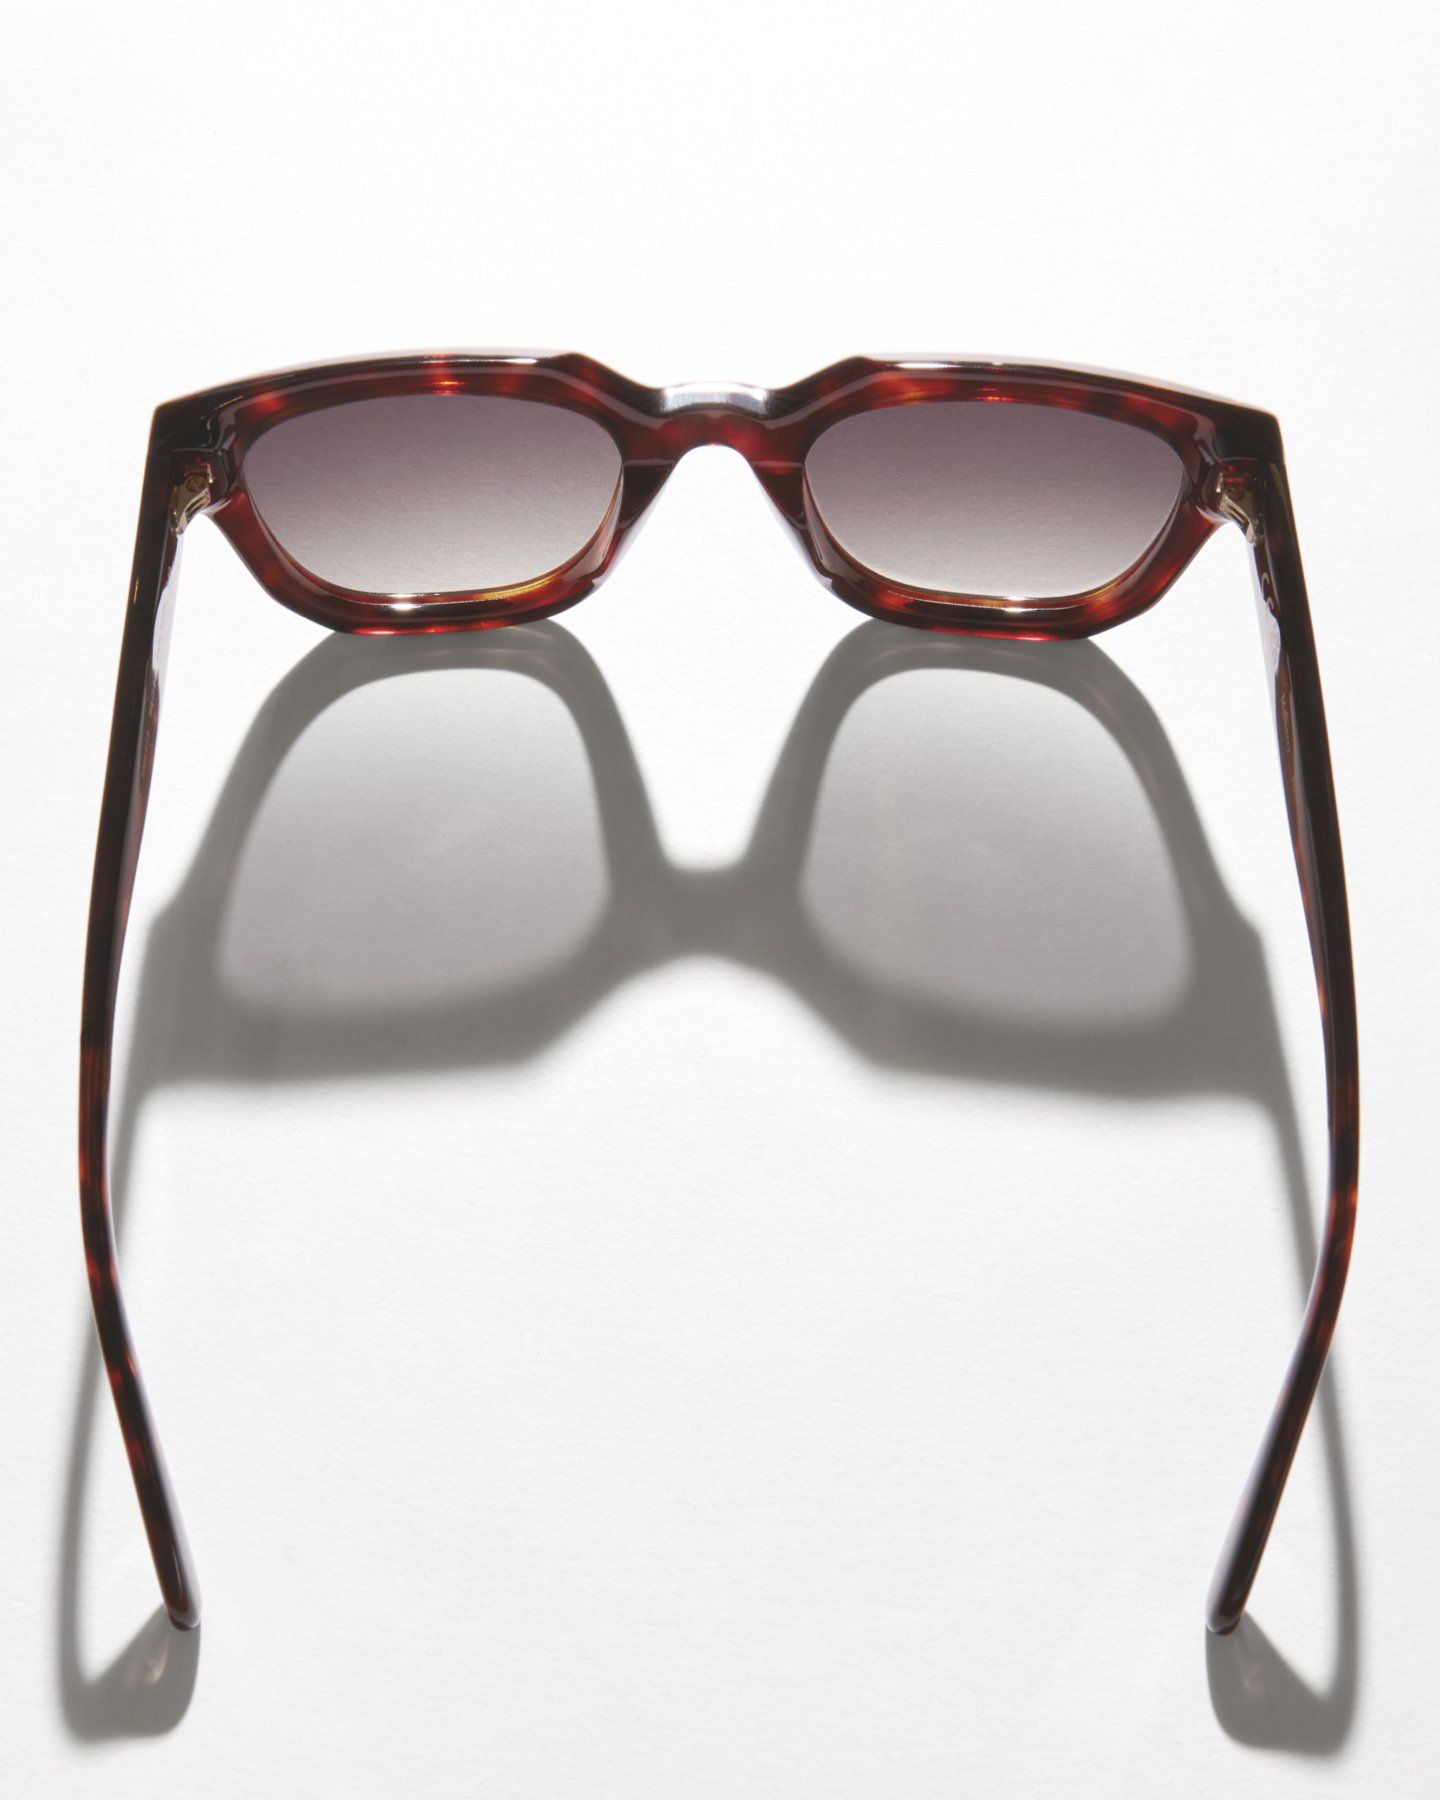 Mulberry Belgrave Sunglasses in Tortoiseshell